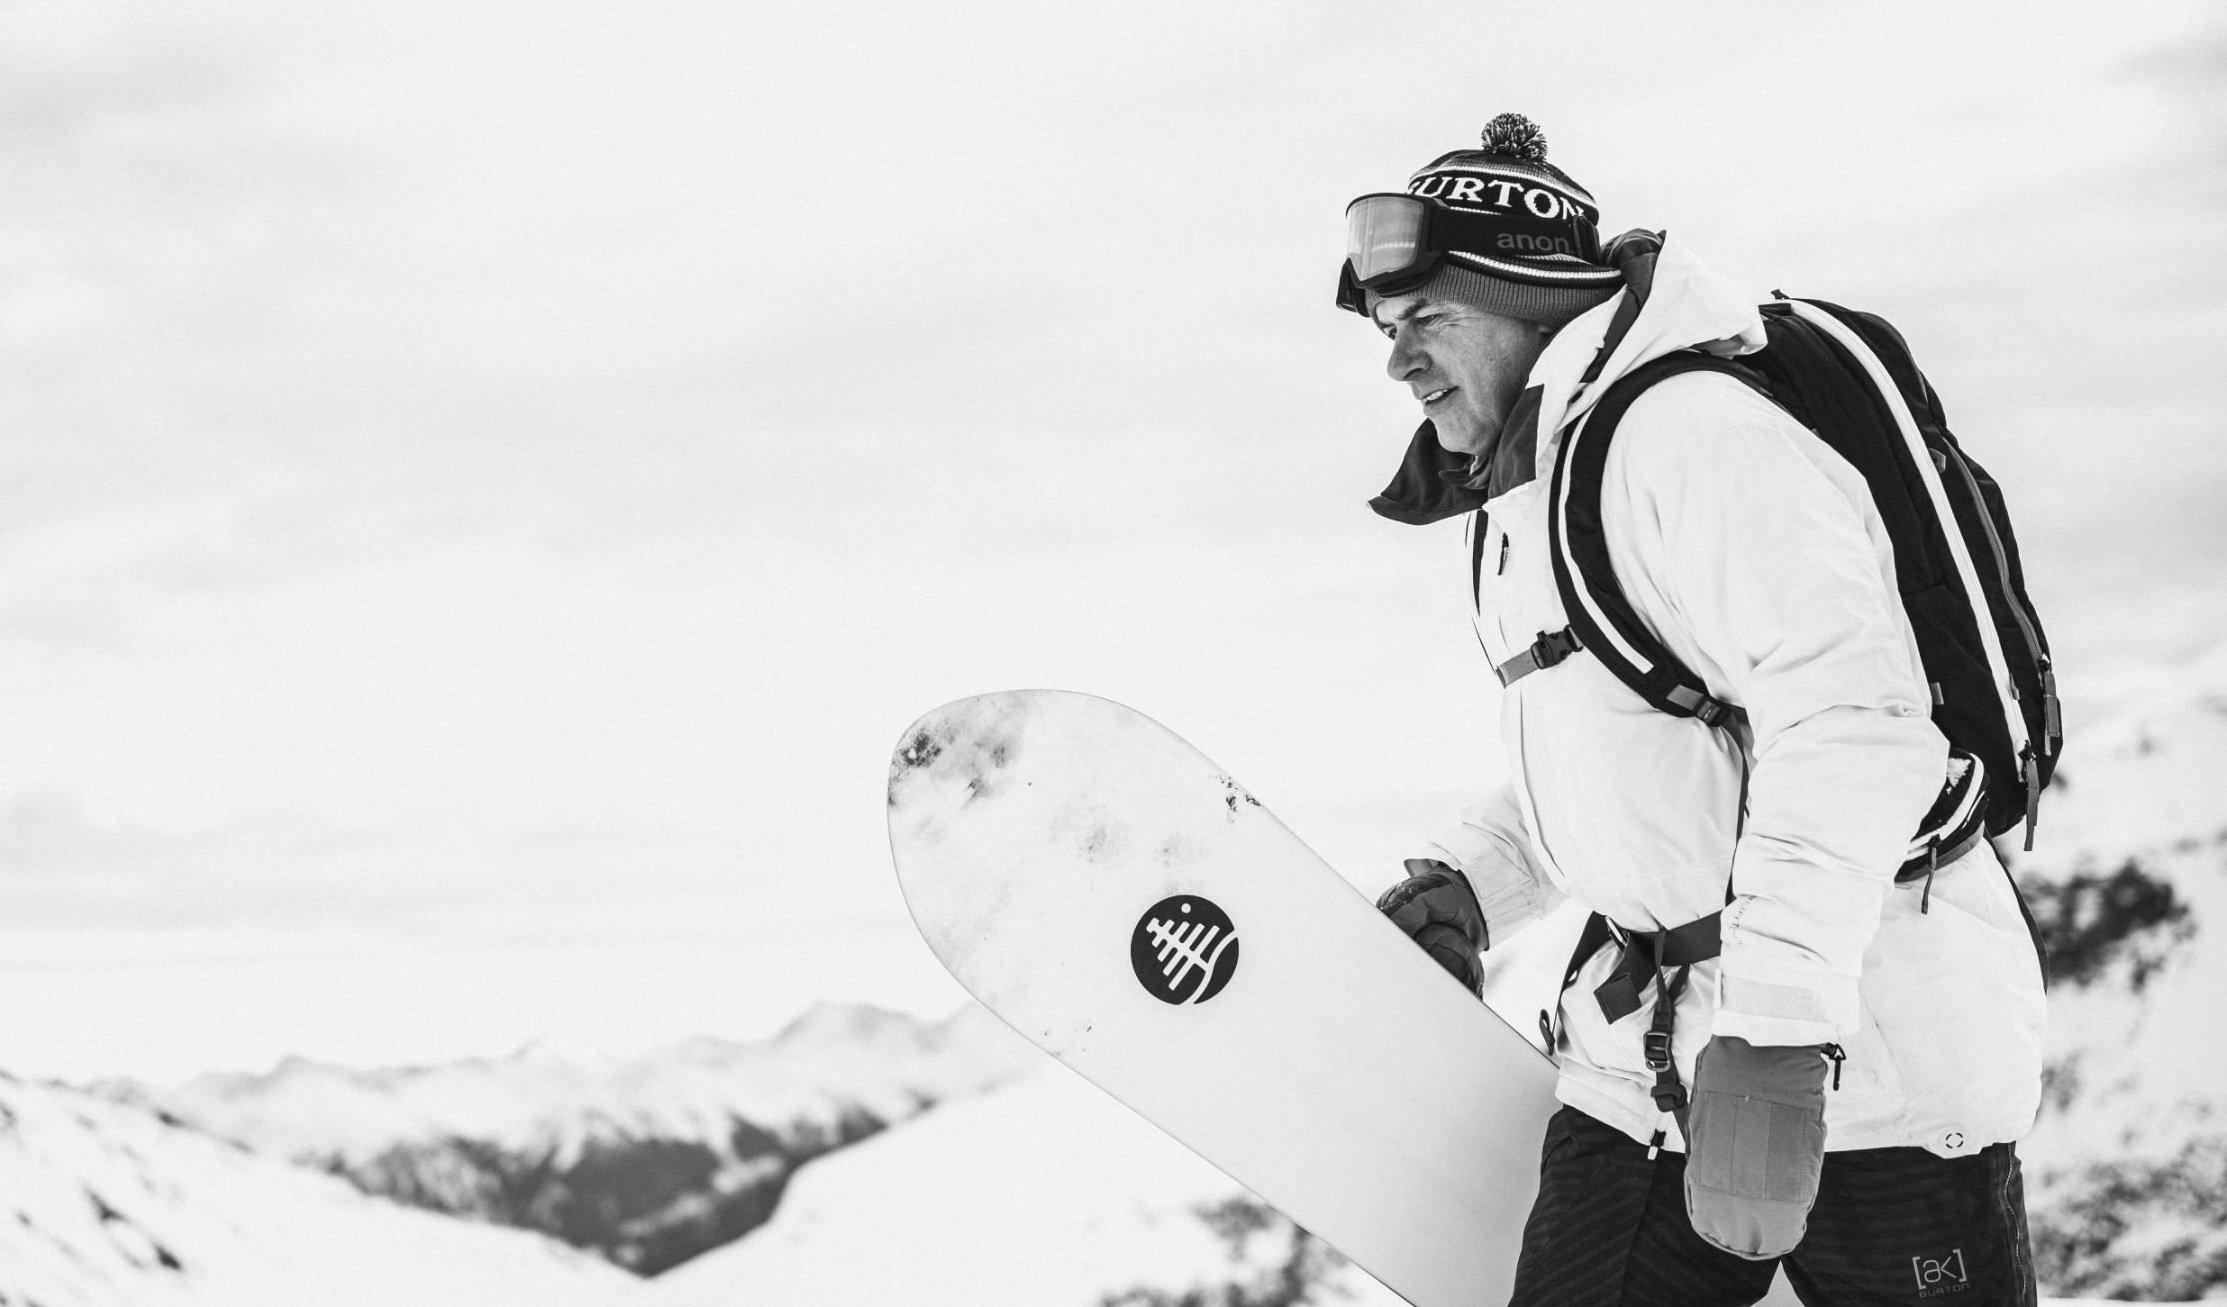 Kép: Burton Snowboards